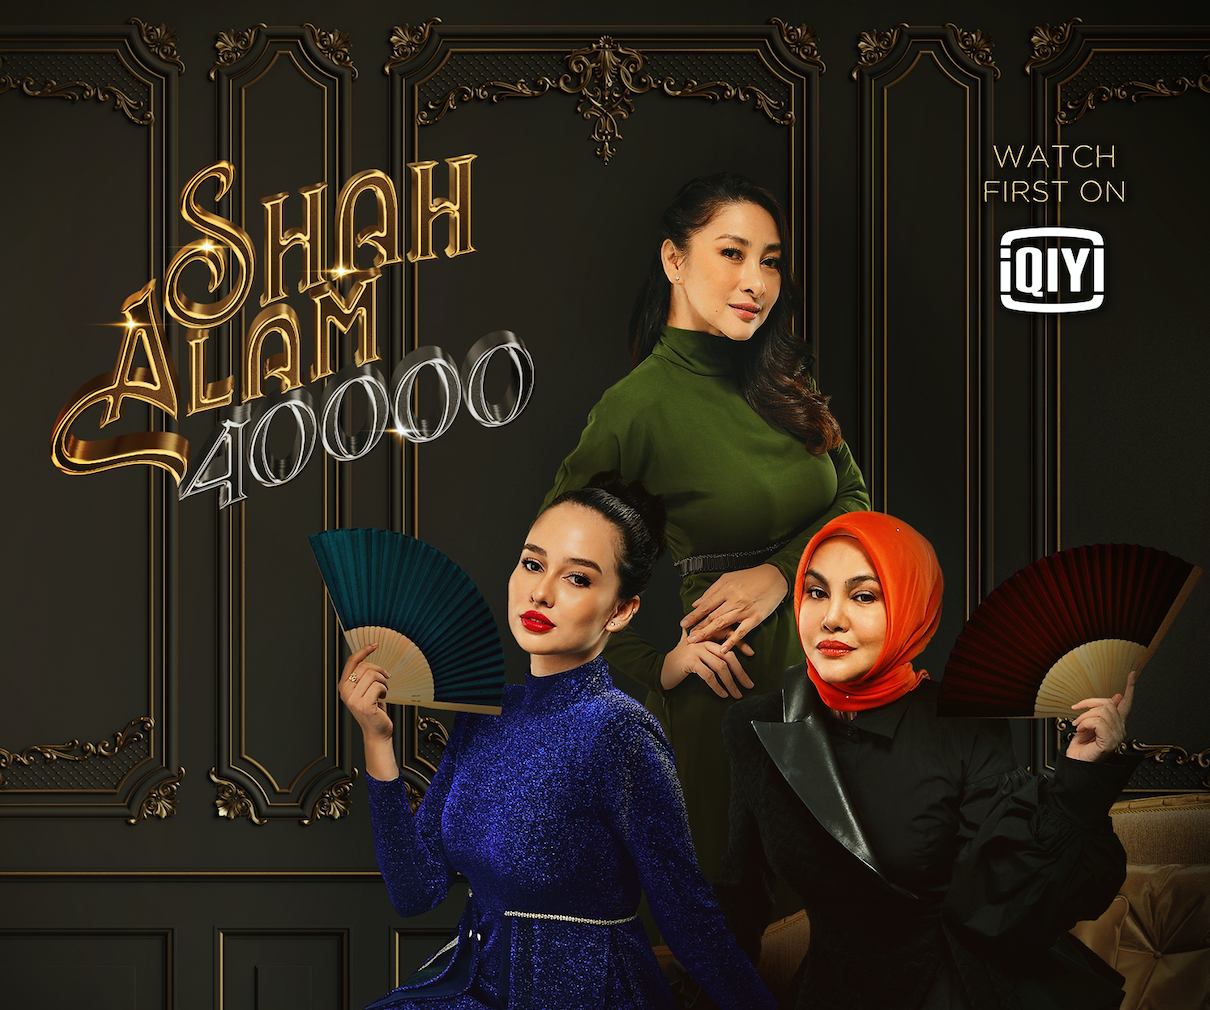 Kisah ‘Datin-Datin’ Bikin Drama ‘Shah Alam 40000’ Gamat, Tonton Secara Eksklusif Di iQiyi Sekarang!